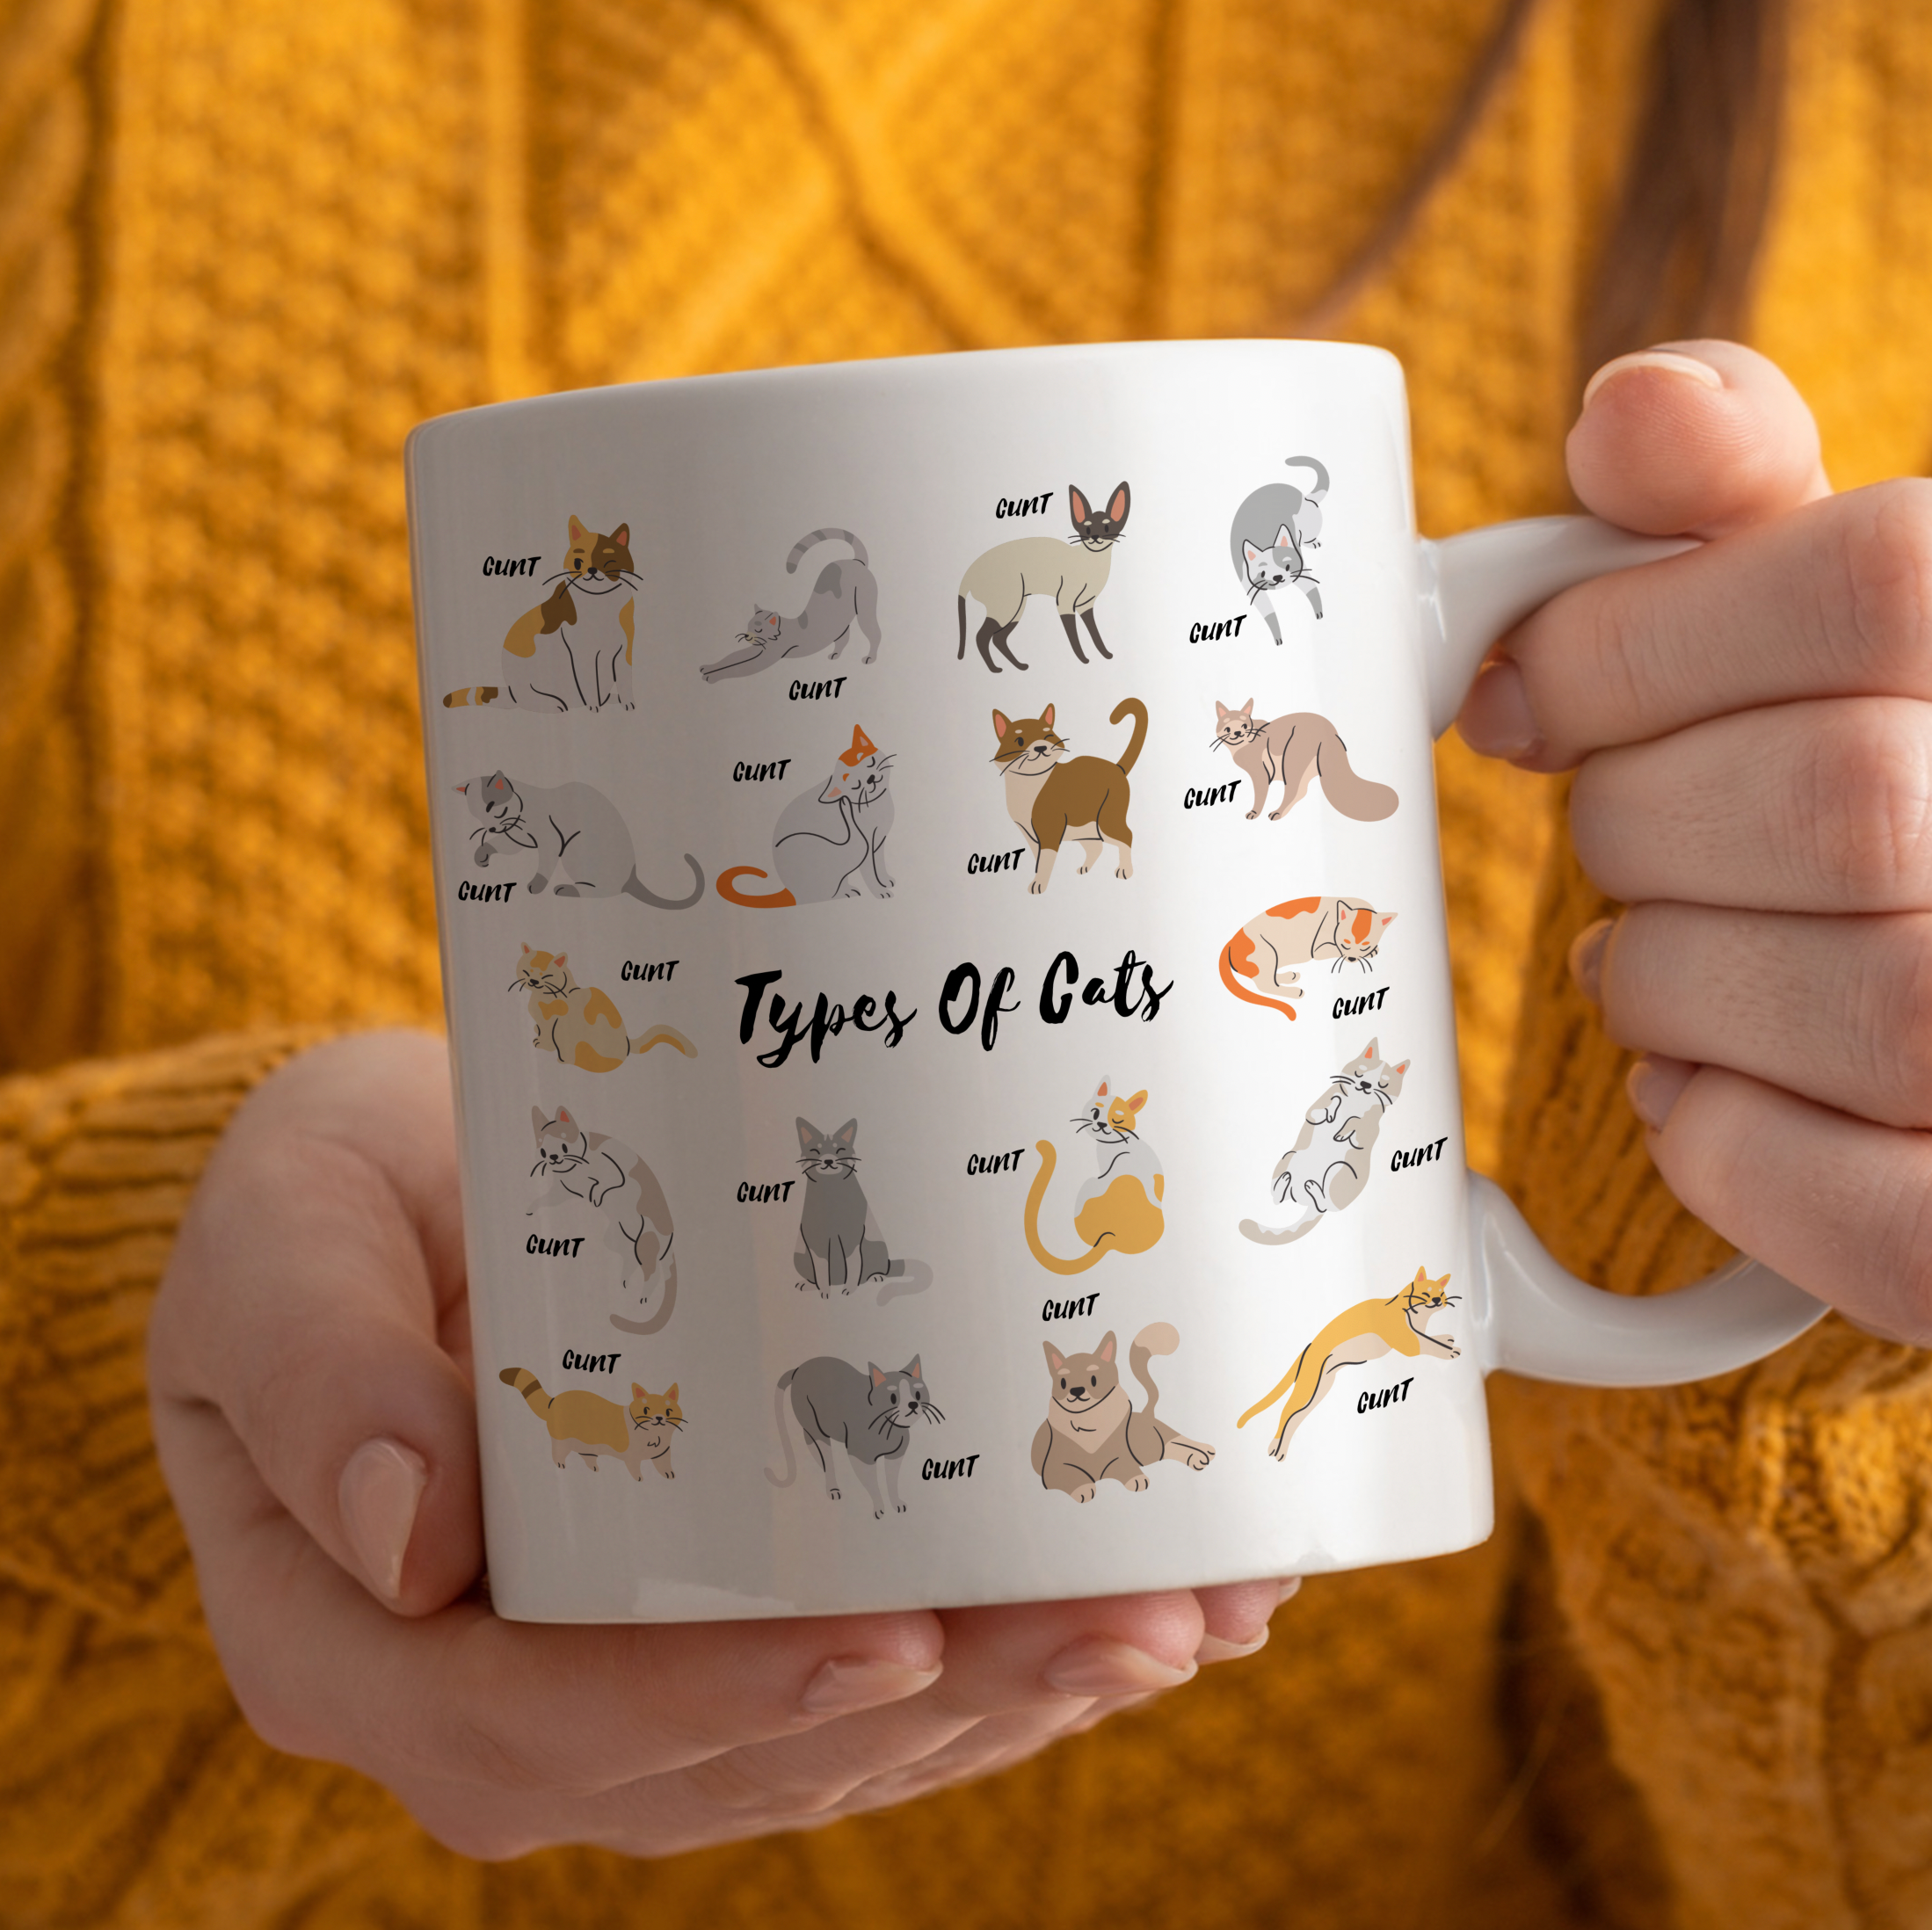 Types Of Cats Mug